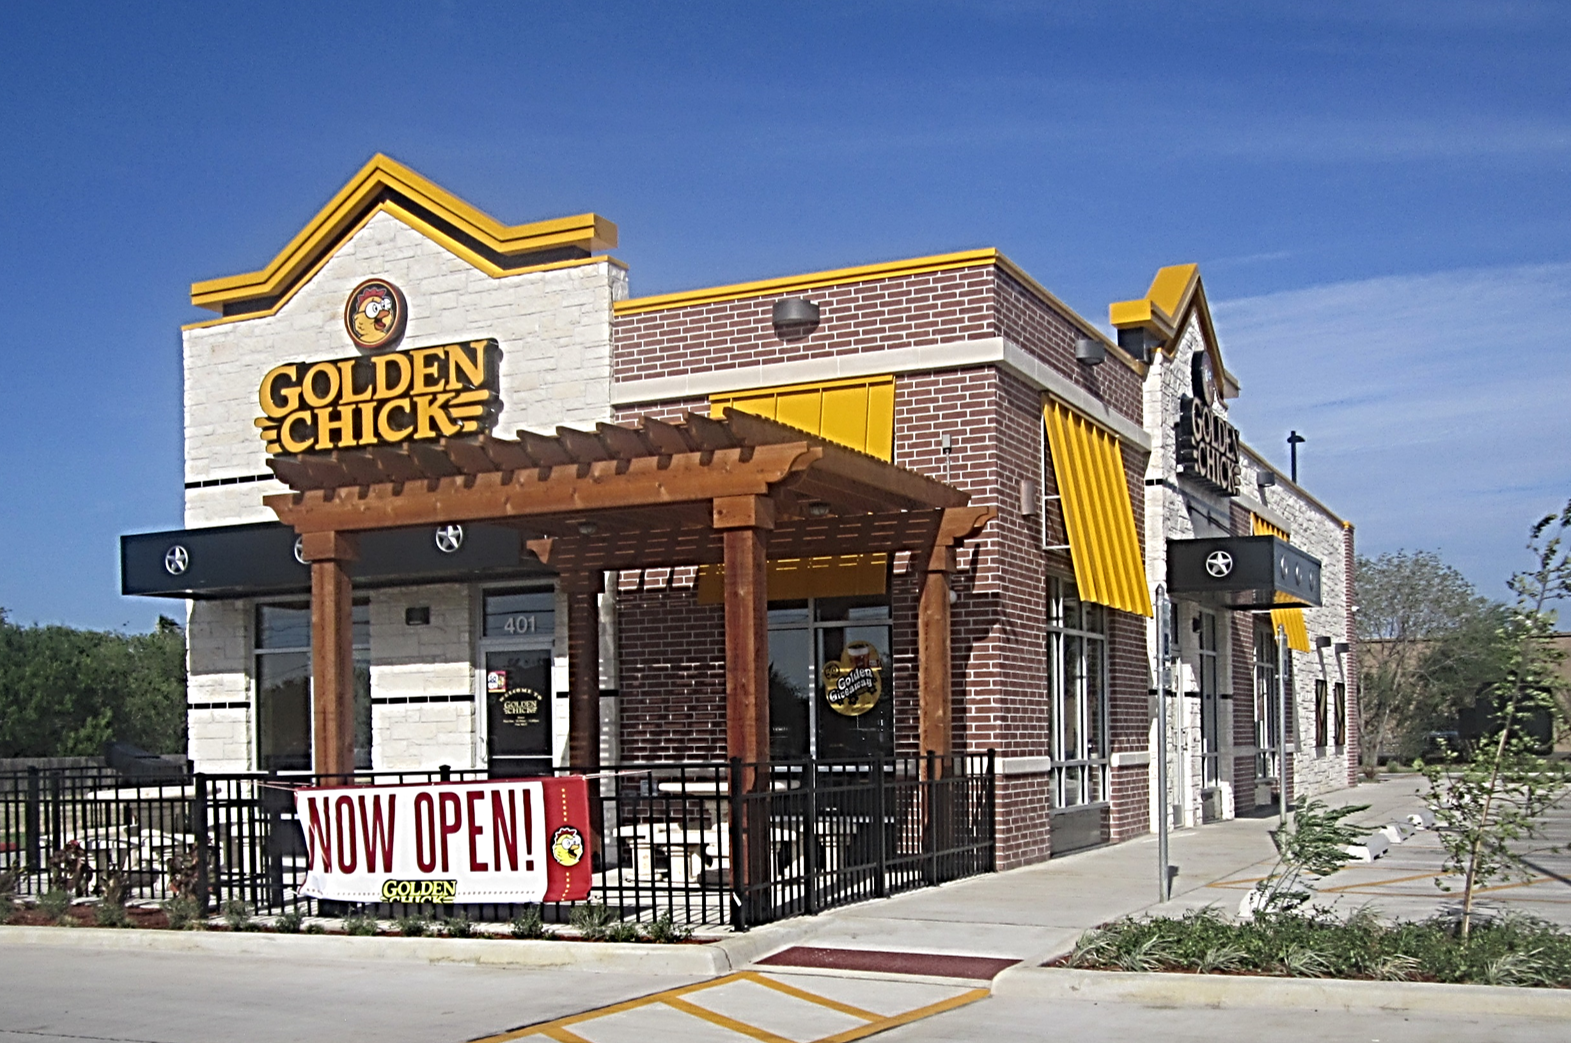 Golden Chick storefront.  Your local Golden Chick fast food restaurant in Edinburg, Texas